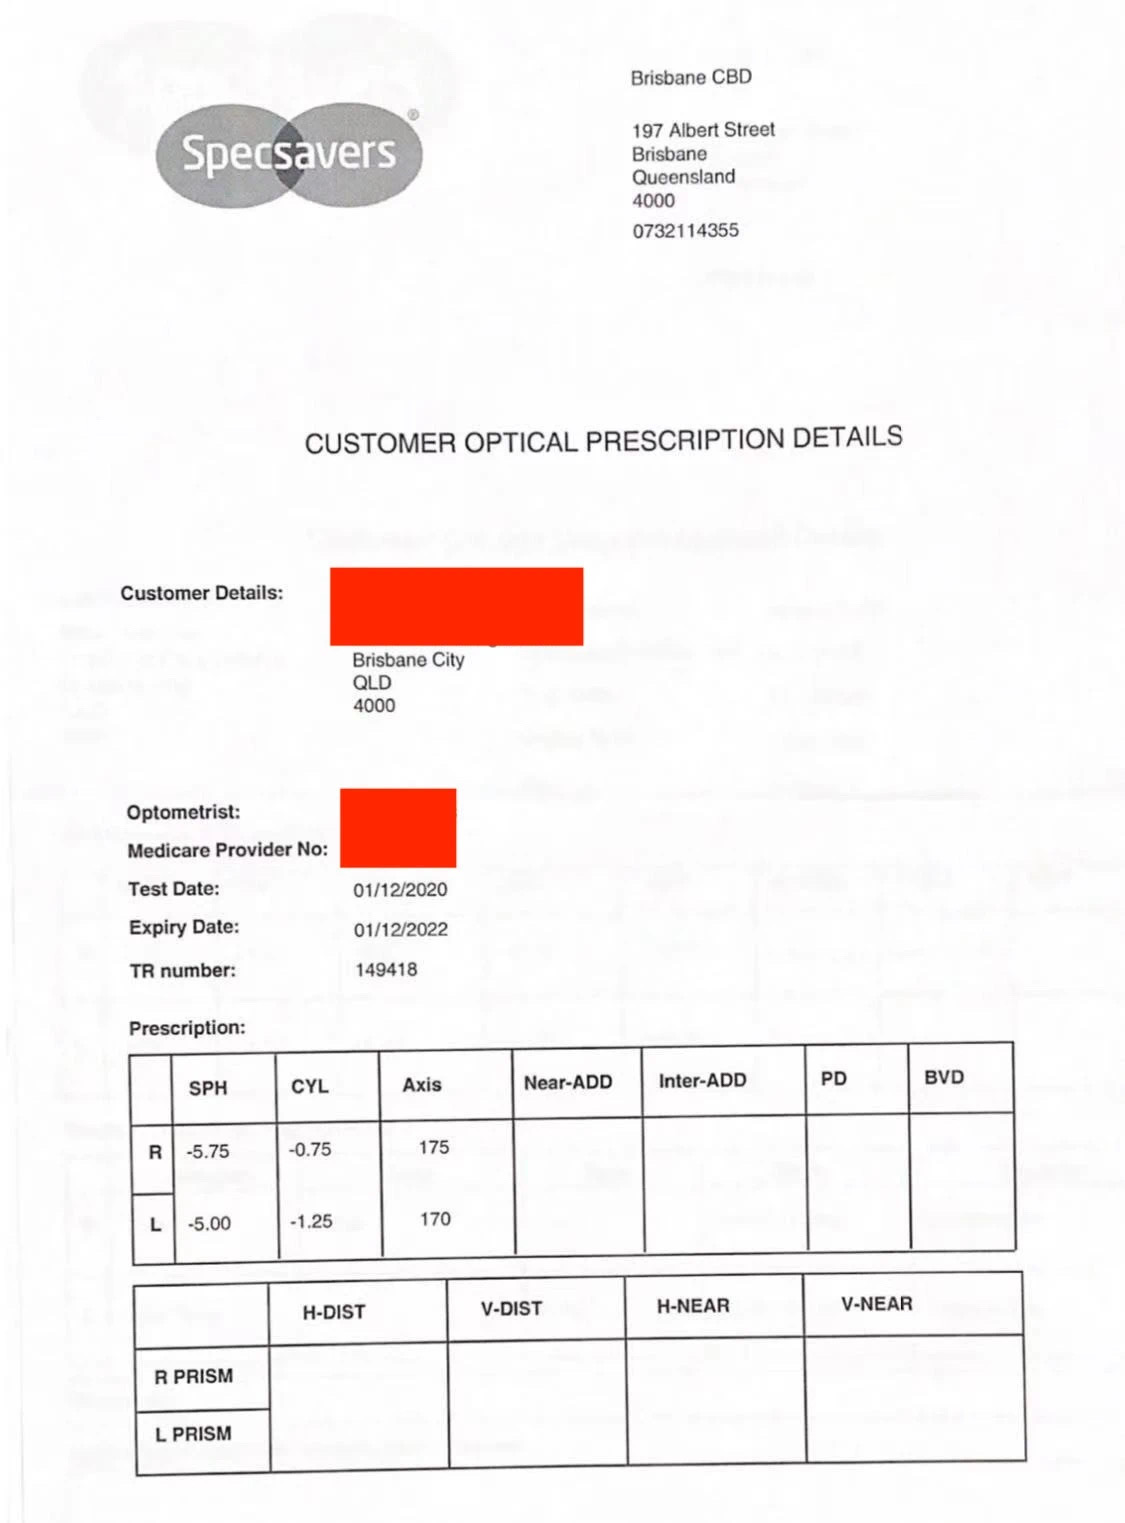 Customer Optical Prescription Details